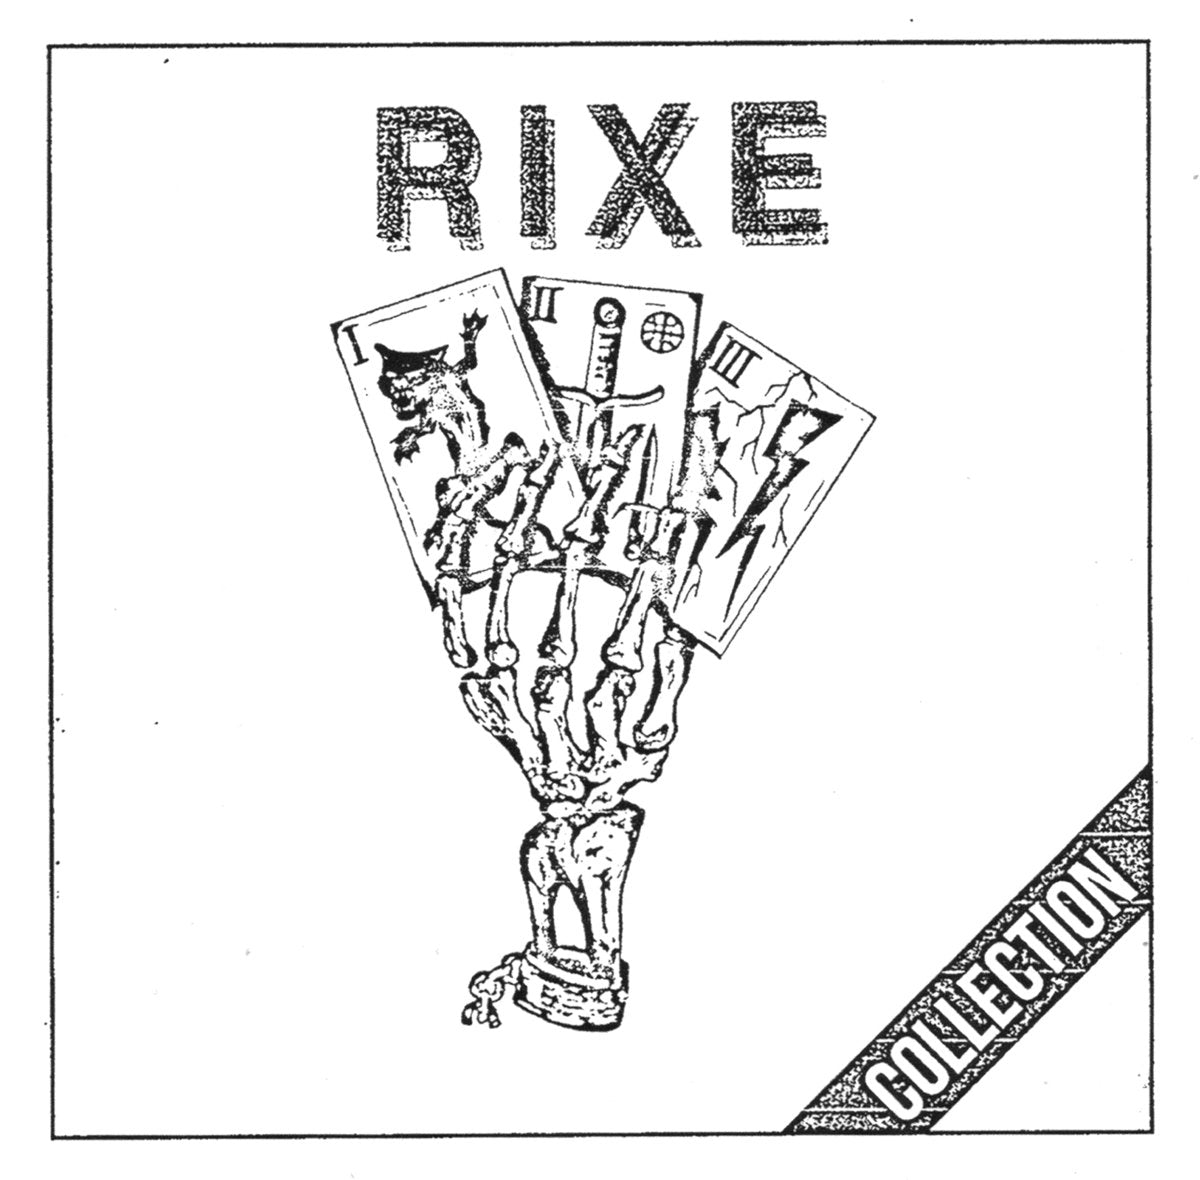 RIXE - "COLLECTION" LP